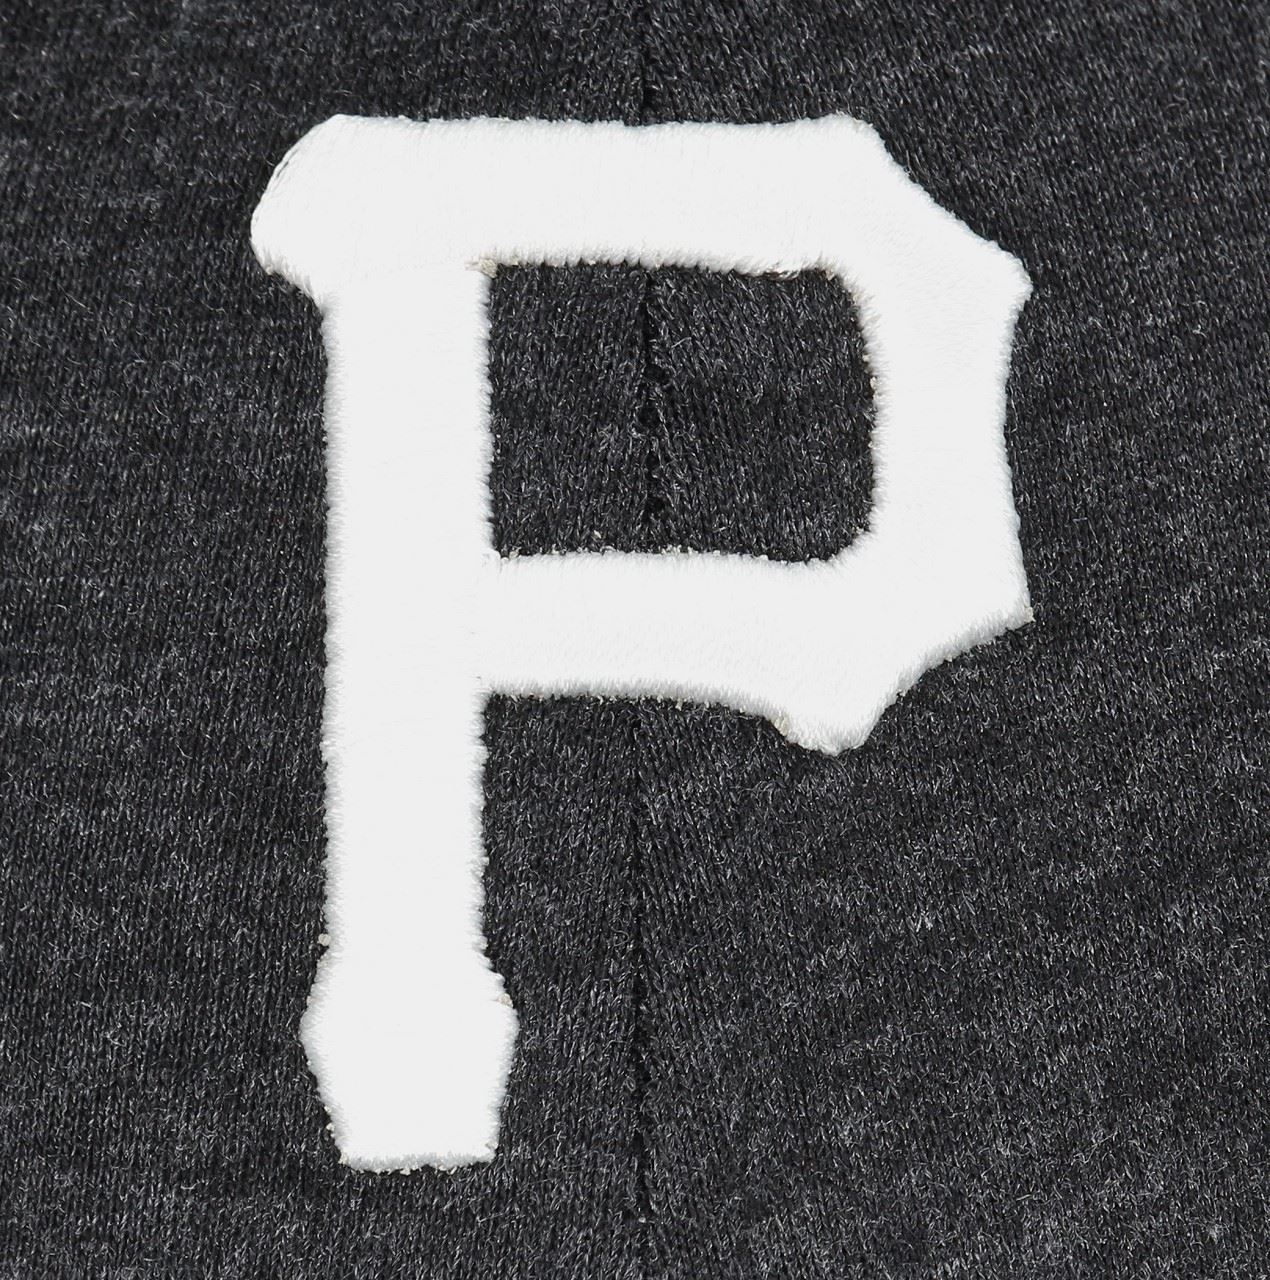 Pittsburgh Pirates MLB Essential A-Frame Trucker Cap New Era